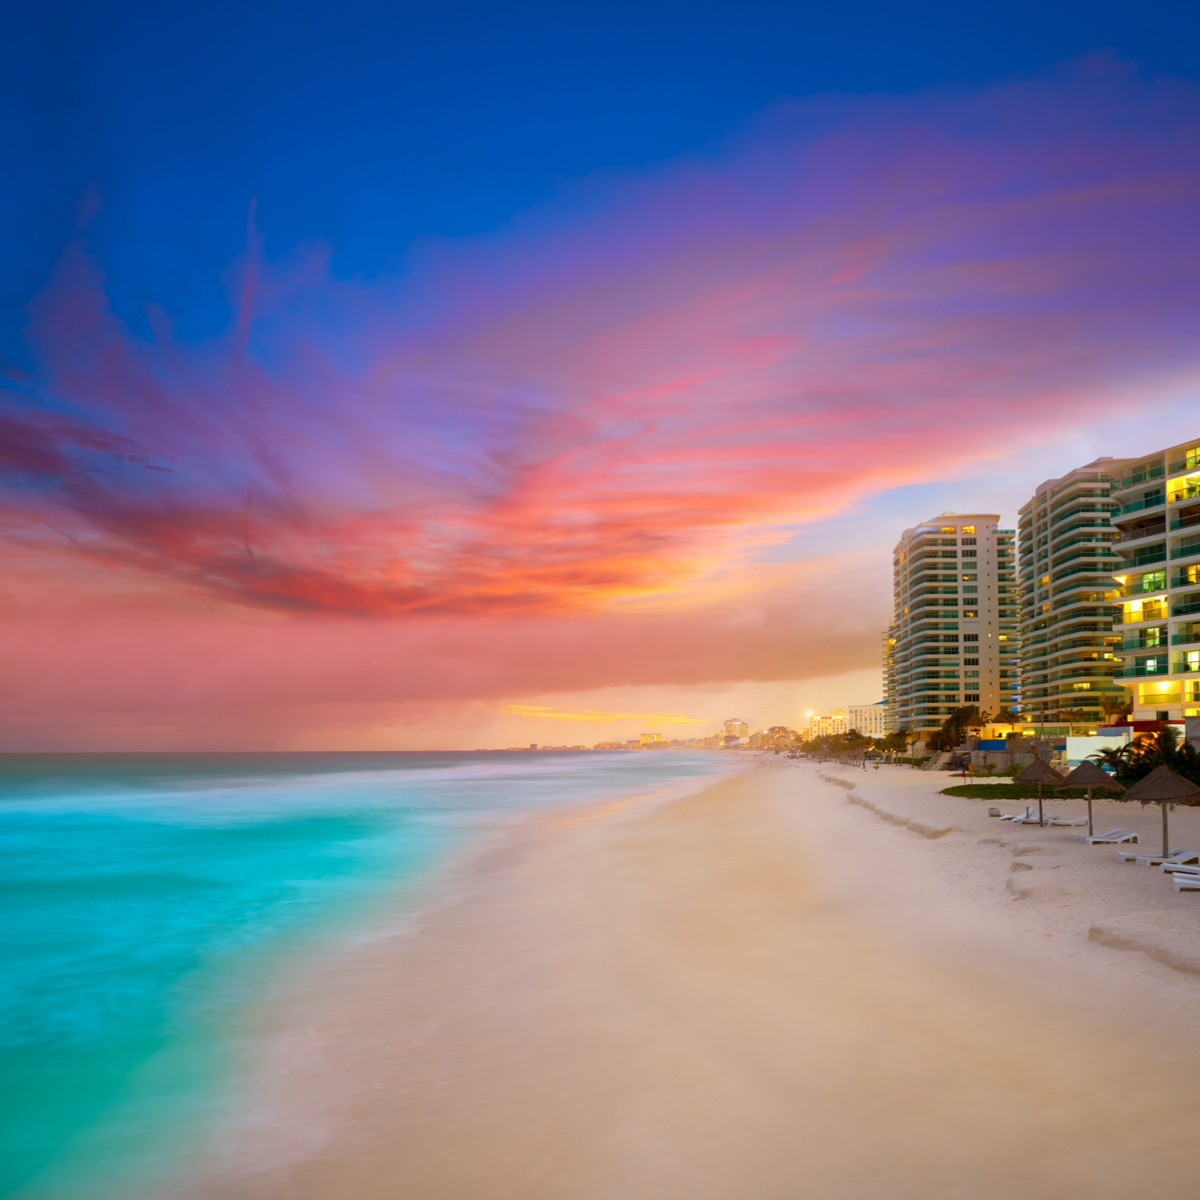 Cancun Forum Beach sunset in Mexico at Hotel zone hotelera Playa Gaviota Azul